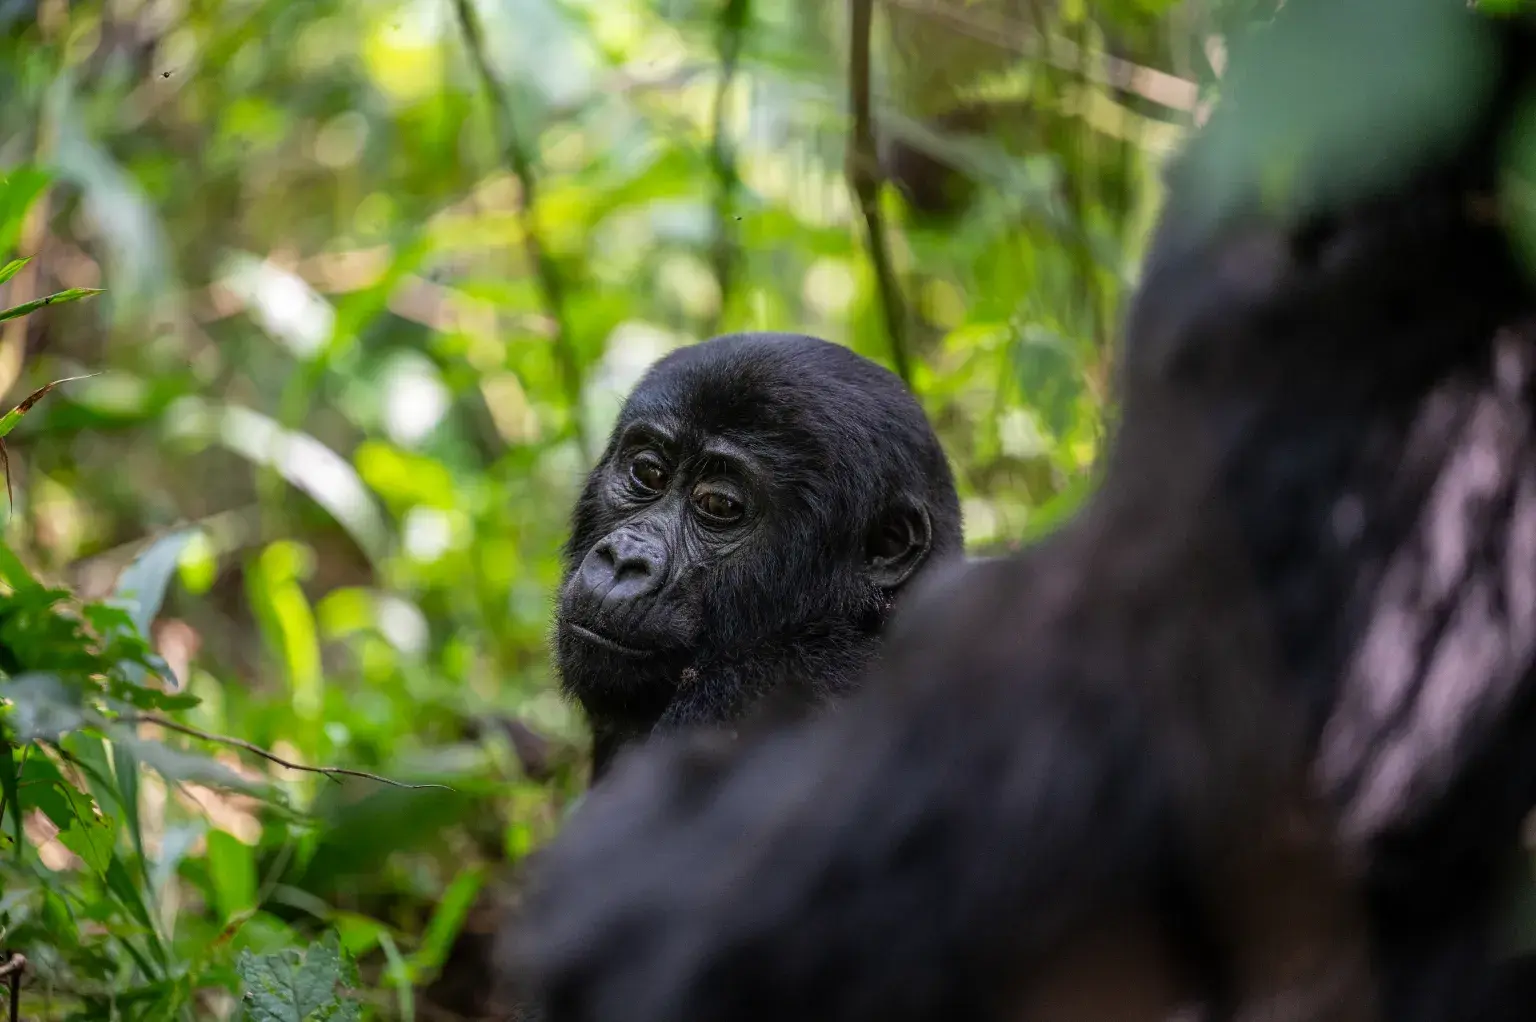 Encountering gorilla families while gorilla trekking in Uganda - a young gorilla